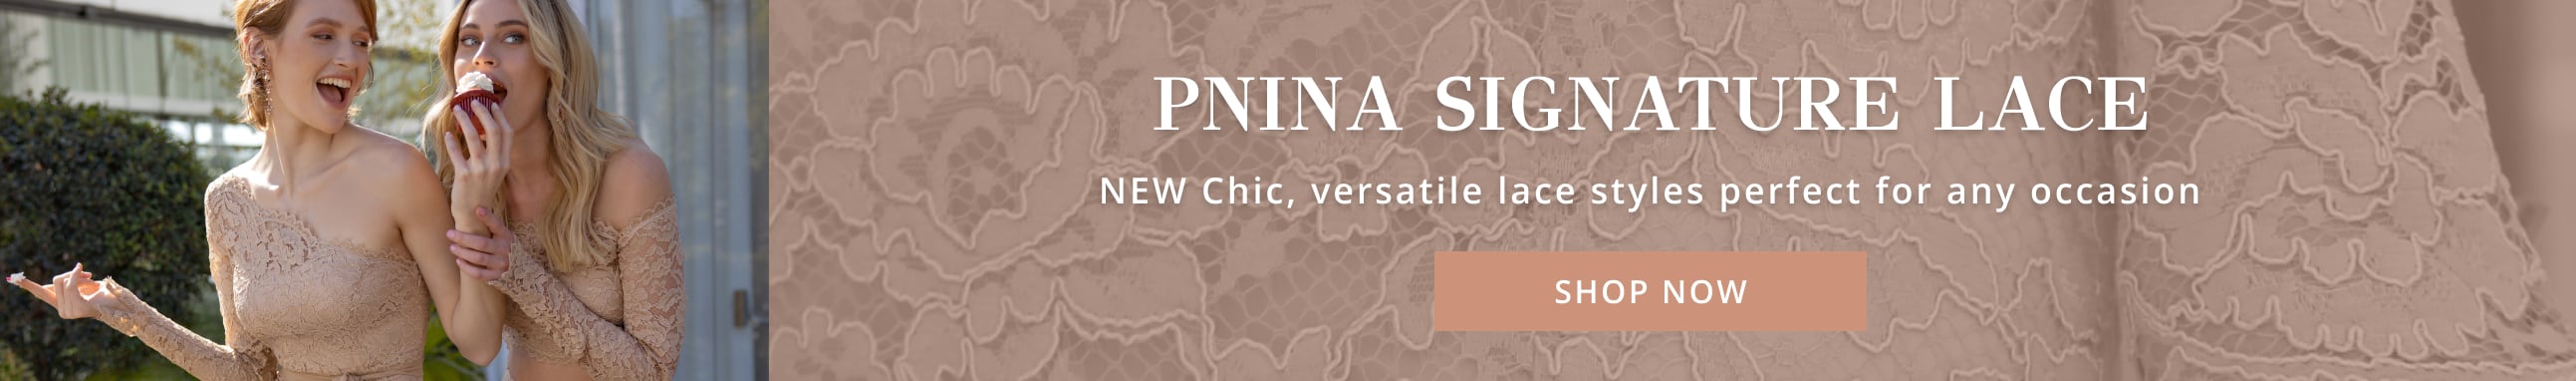 pnina signature lace